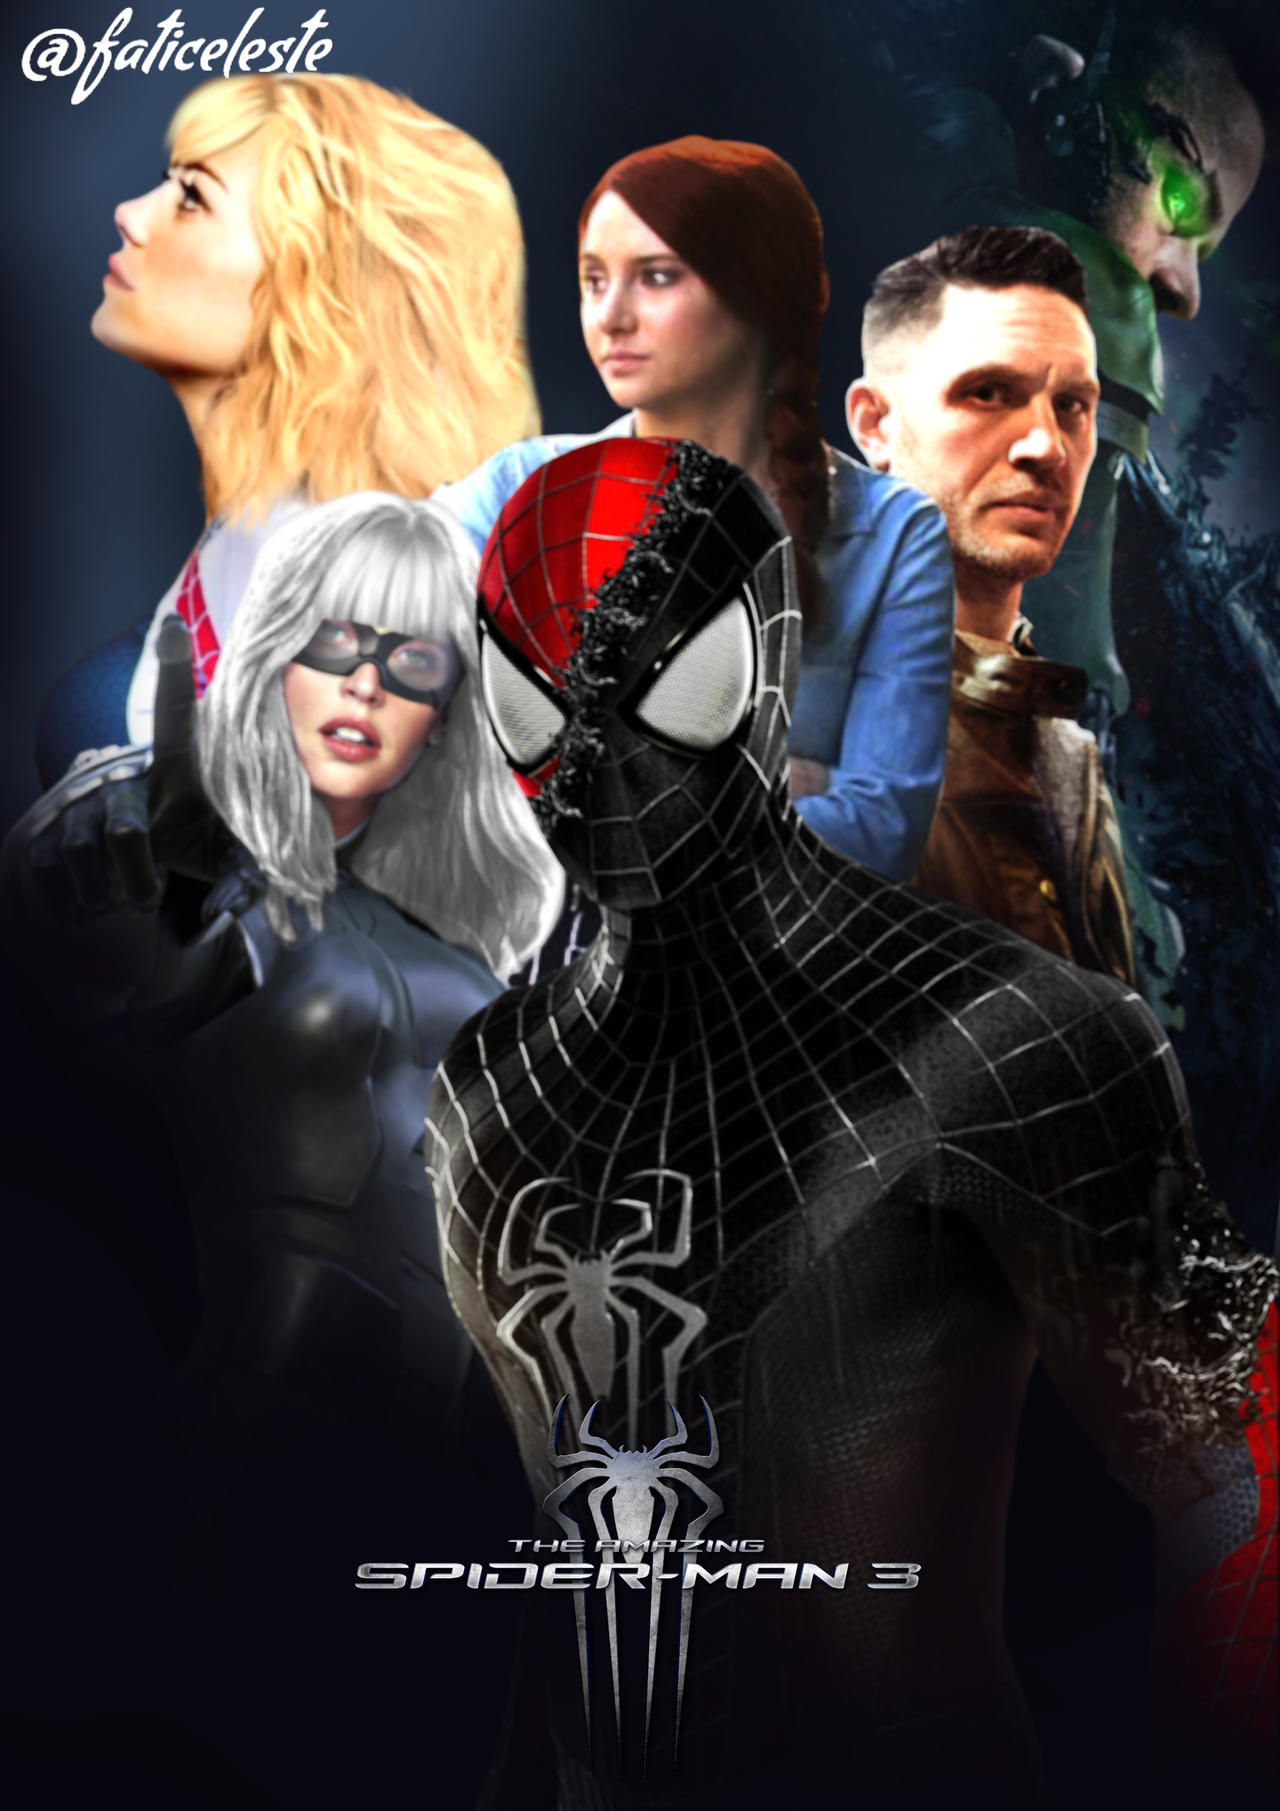 The Amazing Spider-man 3, Rahalarts